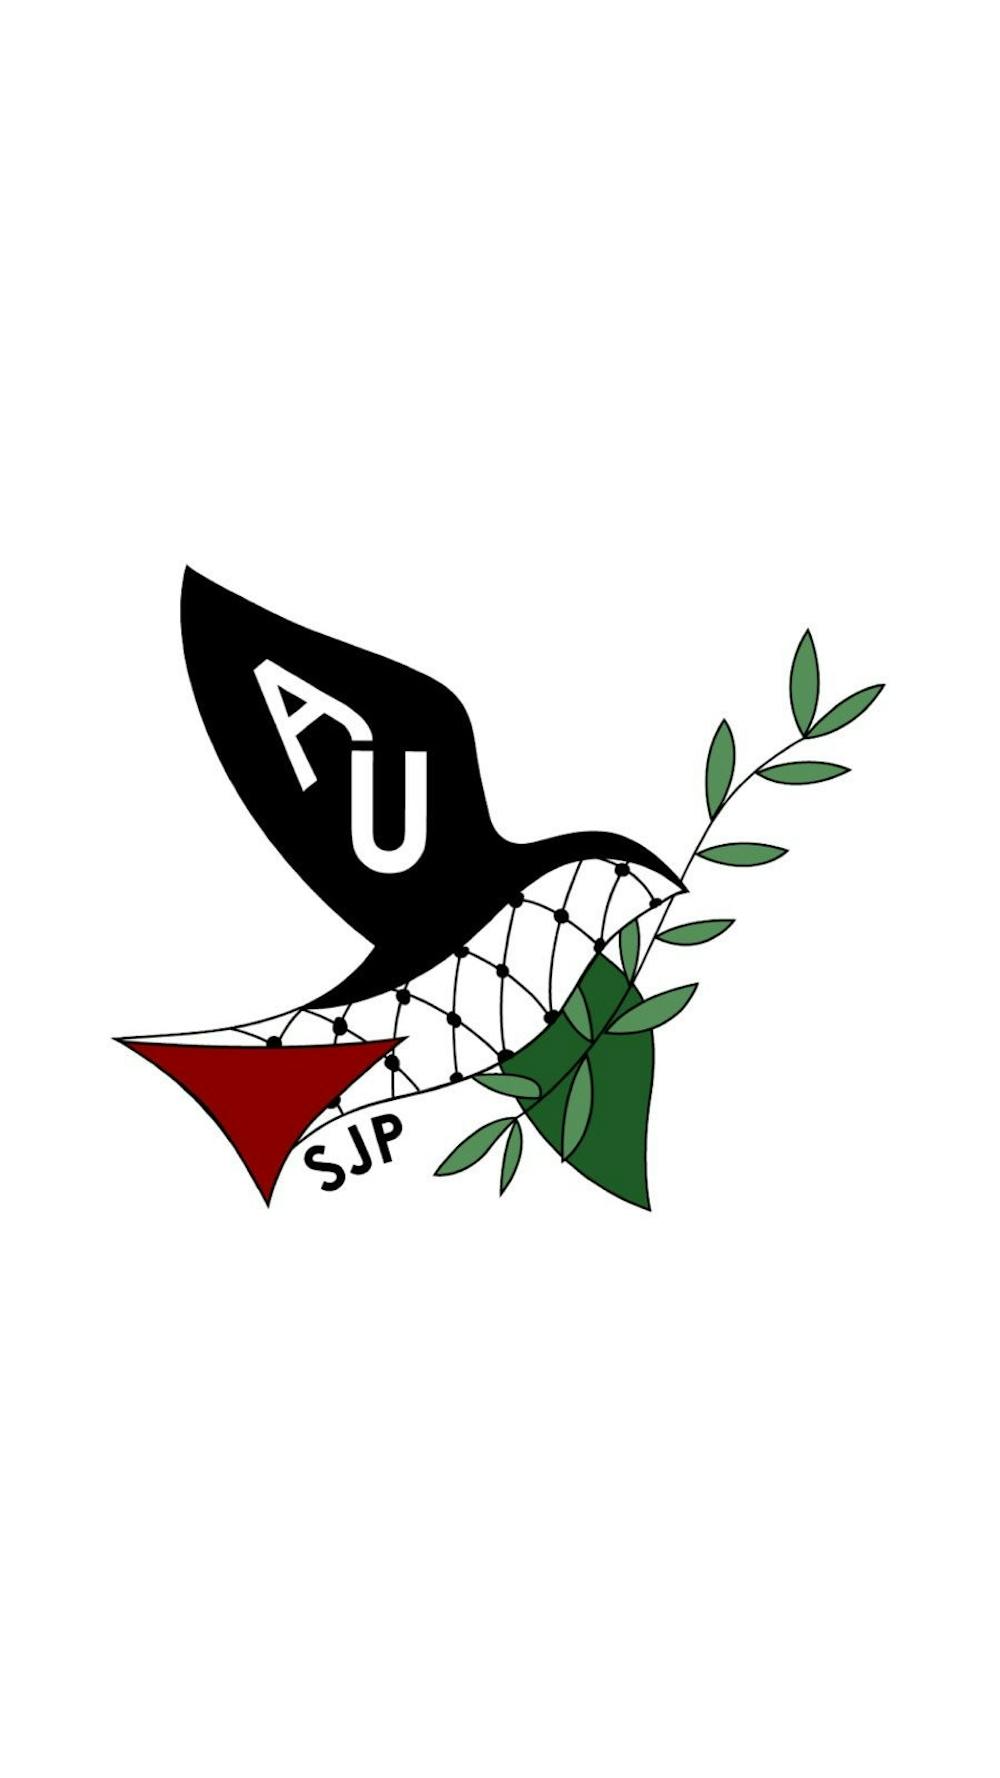 AU SJP Logo.jpeg